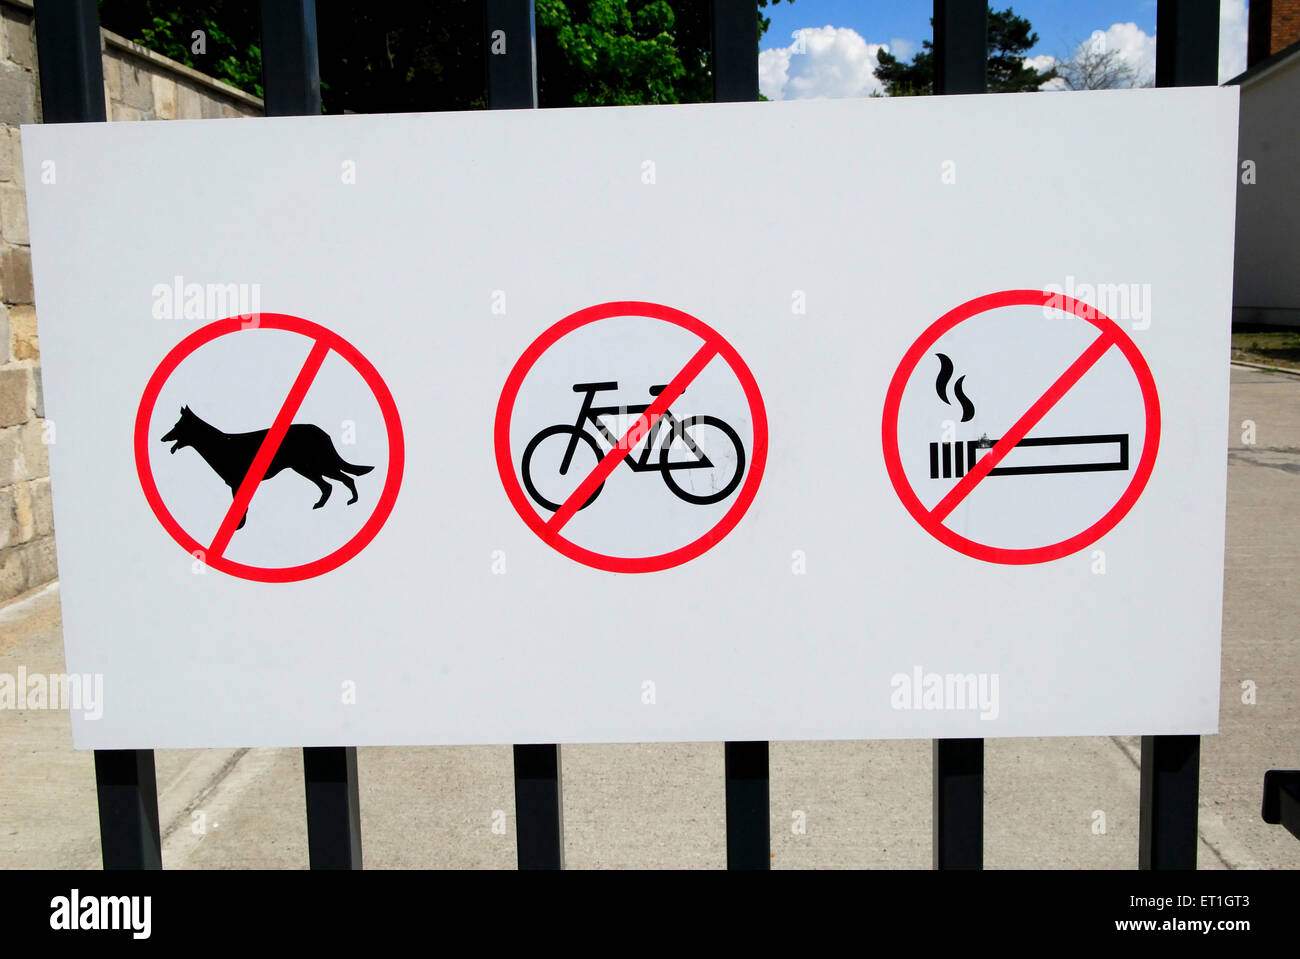 no dog, no cycle, no smoking, sign board, Berlin, Germany, German, Europe, European Stock Photo